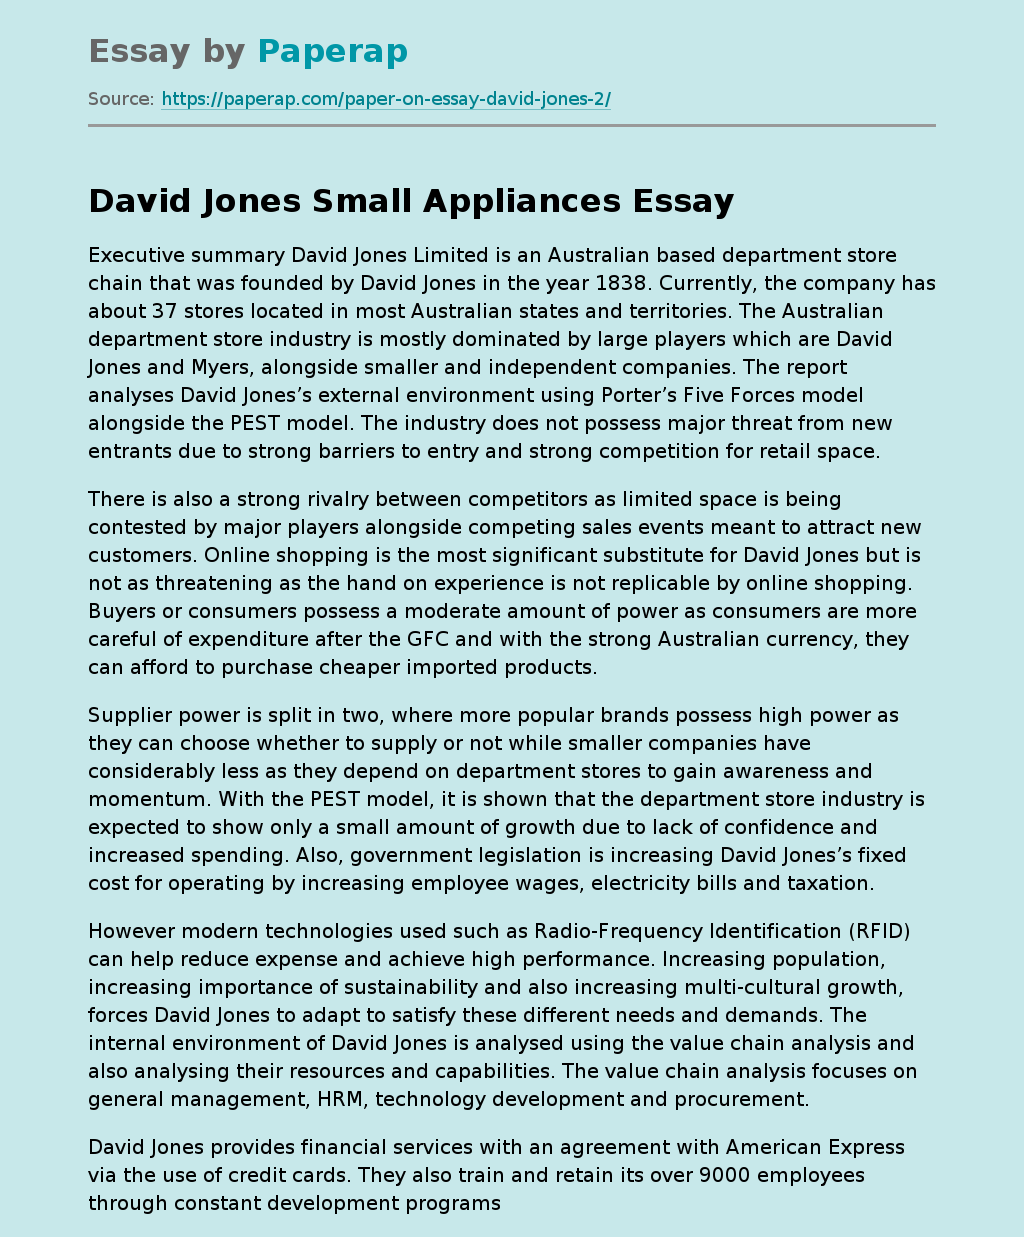 David Jones Small Appliances